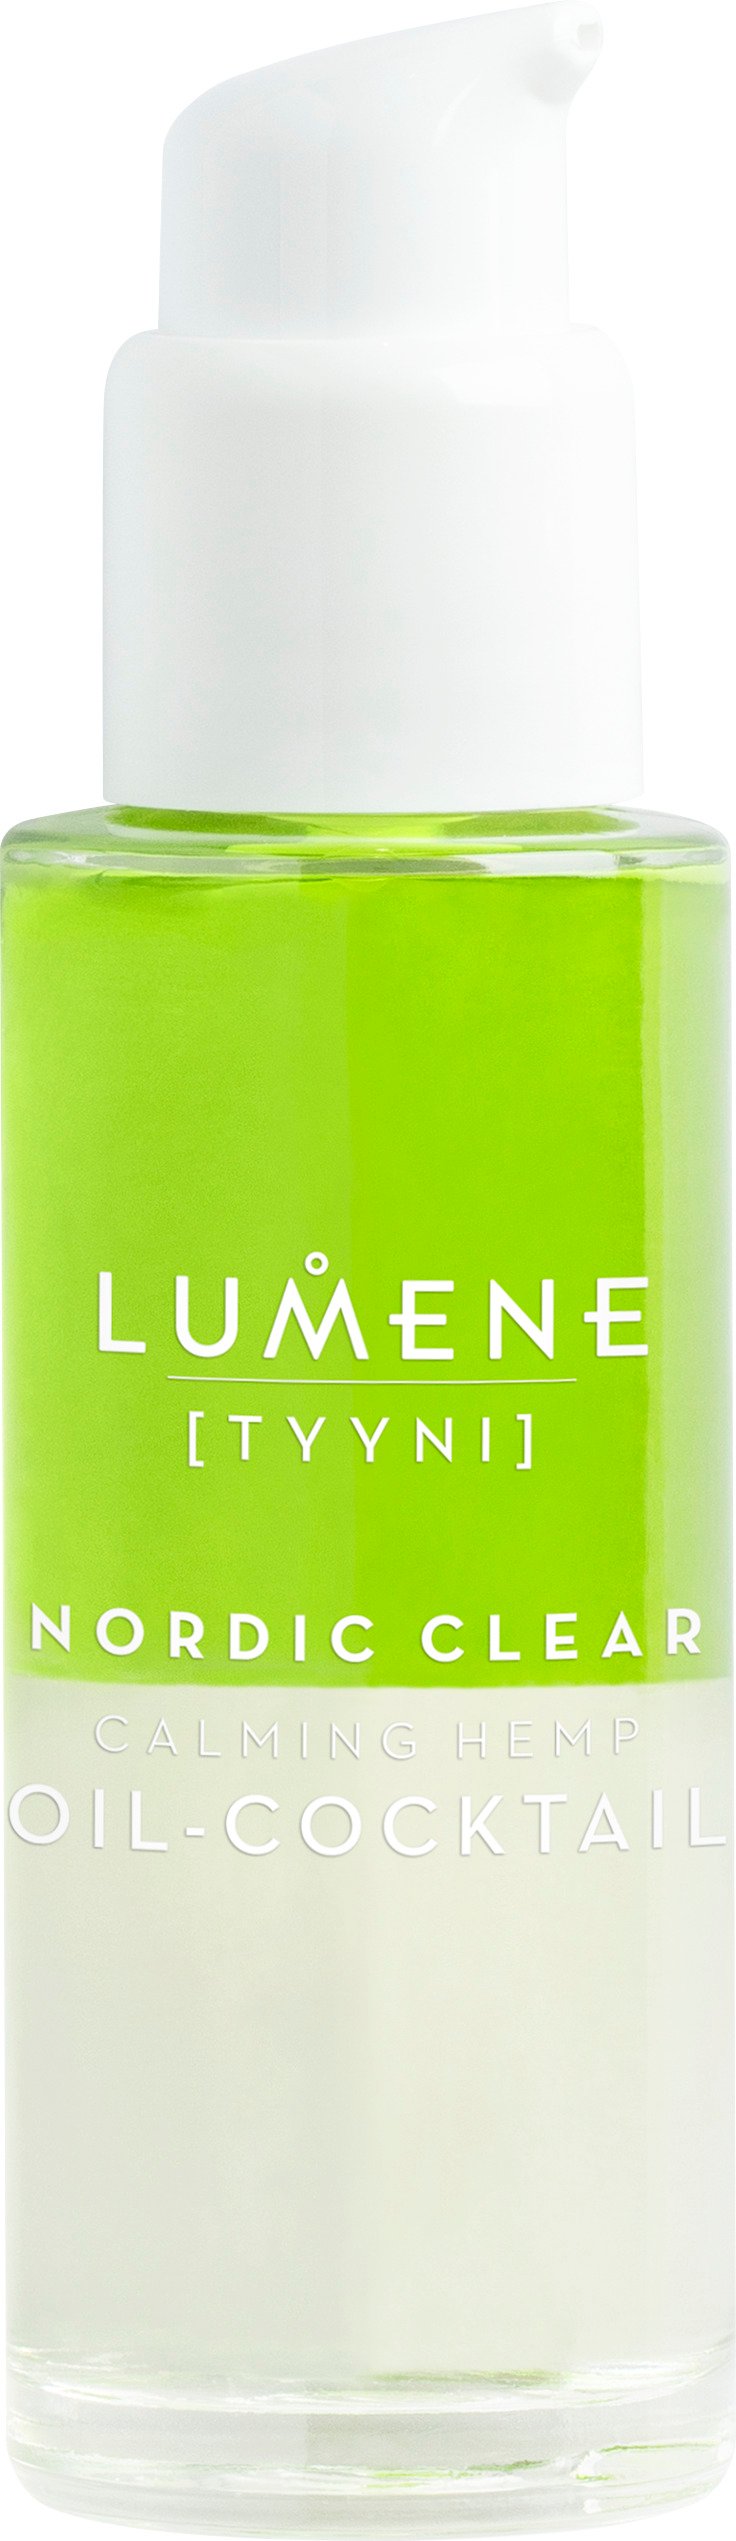 Lumene Nordic Clear Calming Hemp Oil-Cocktail 30 ml